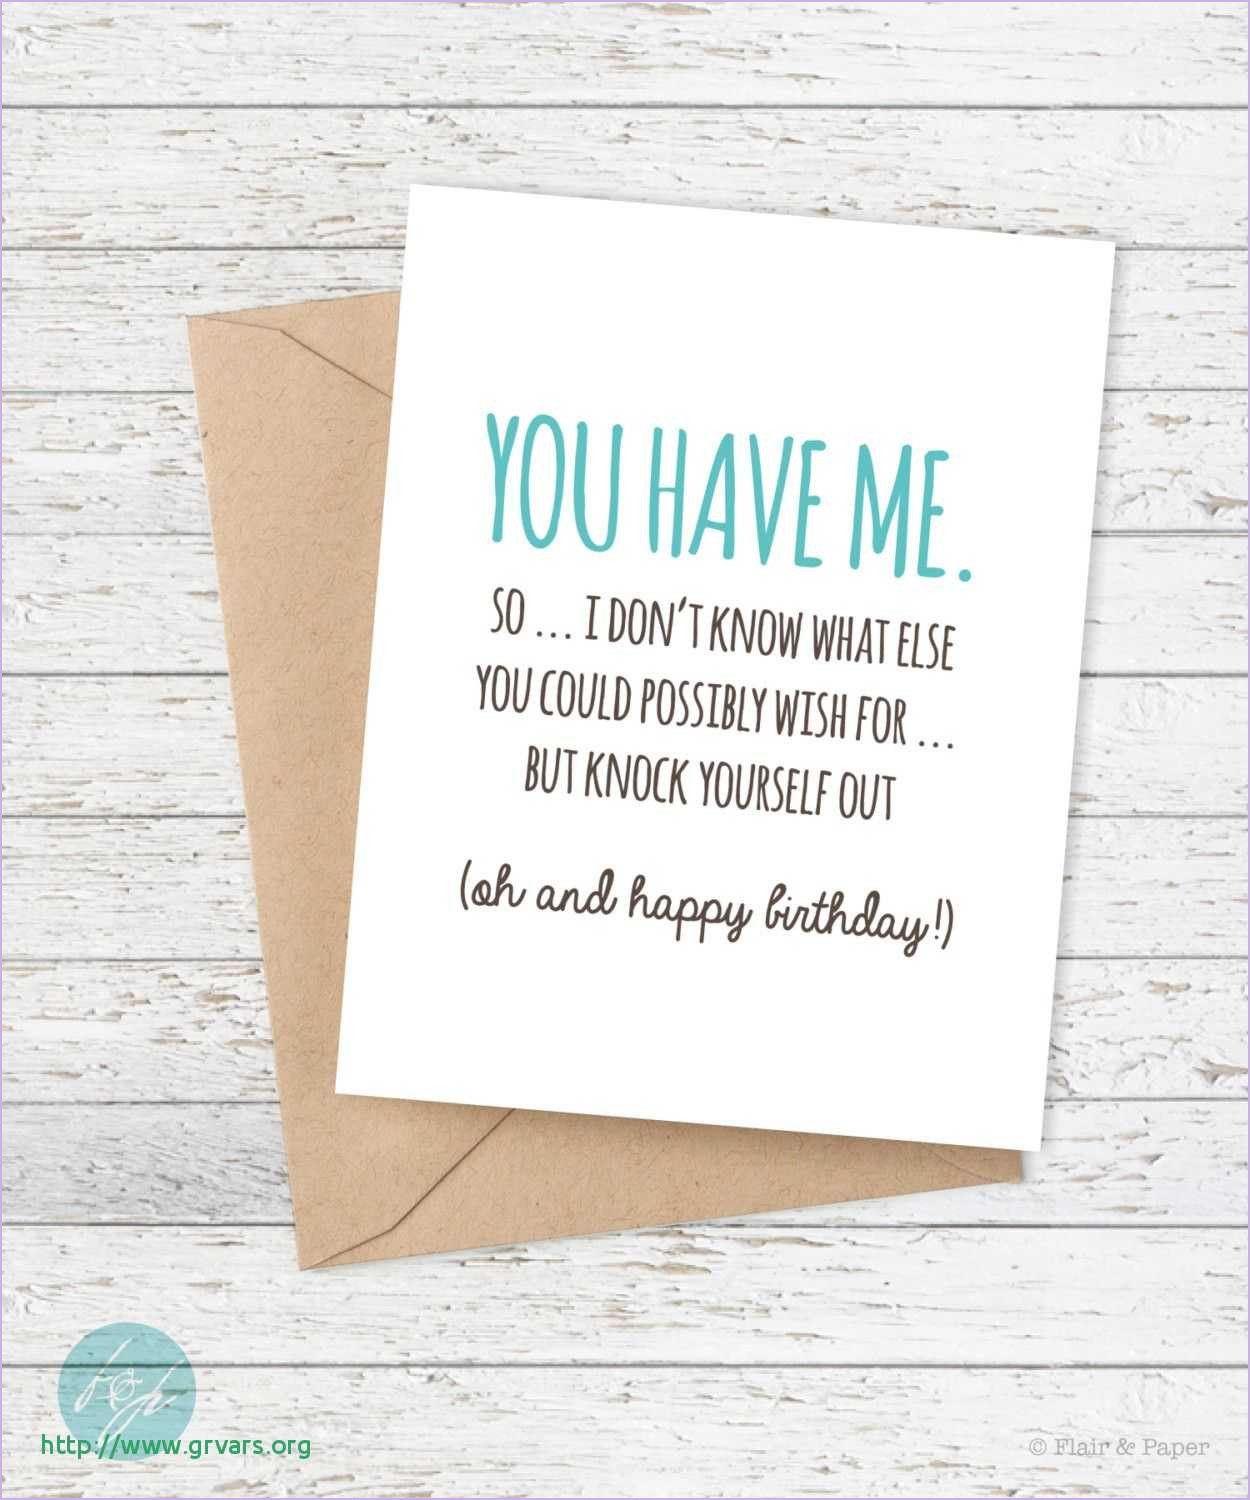 Unique Card Ideas For Birthdays Handmade Birthday Card Ideas For Father Inspirational Happy Birthday